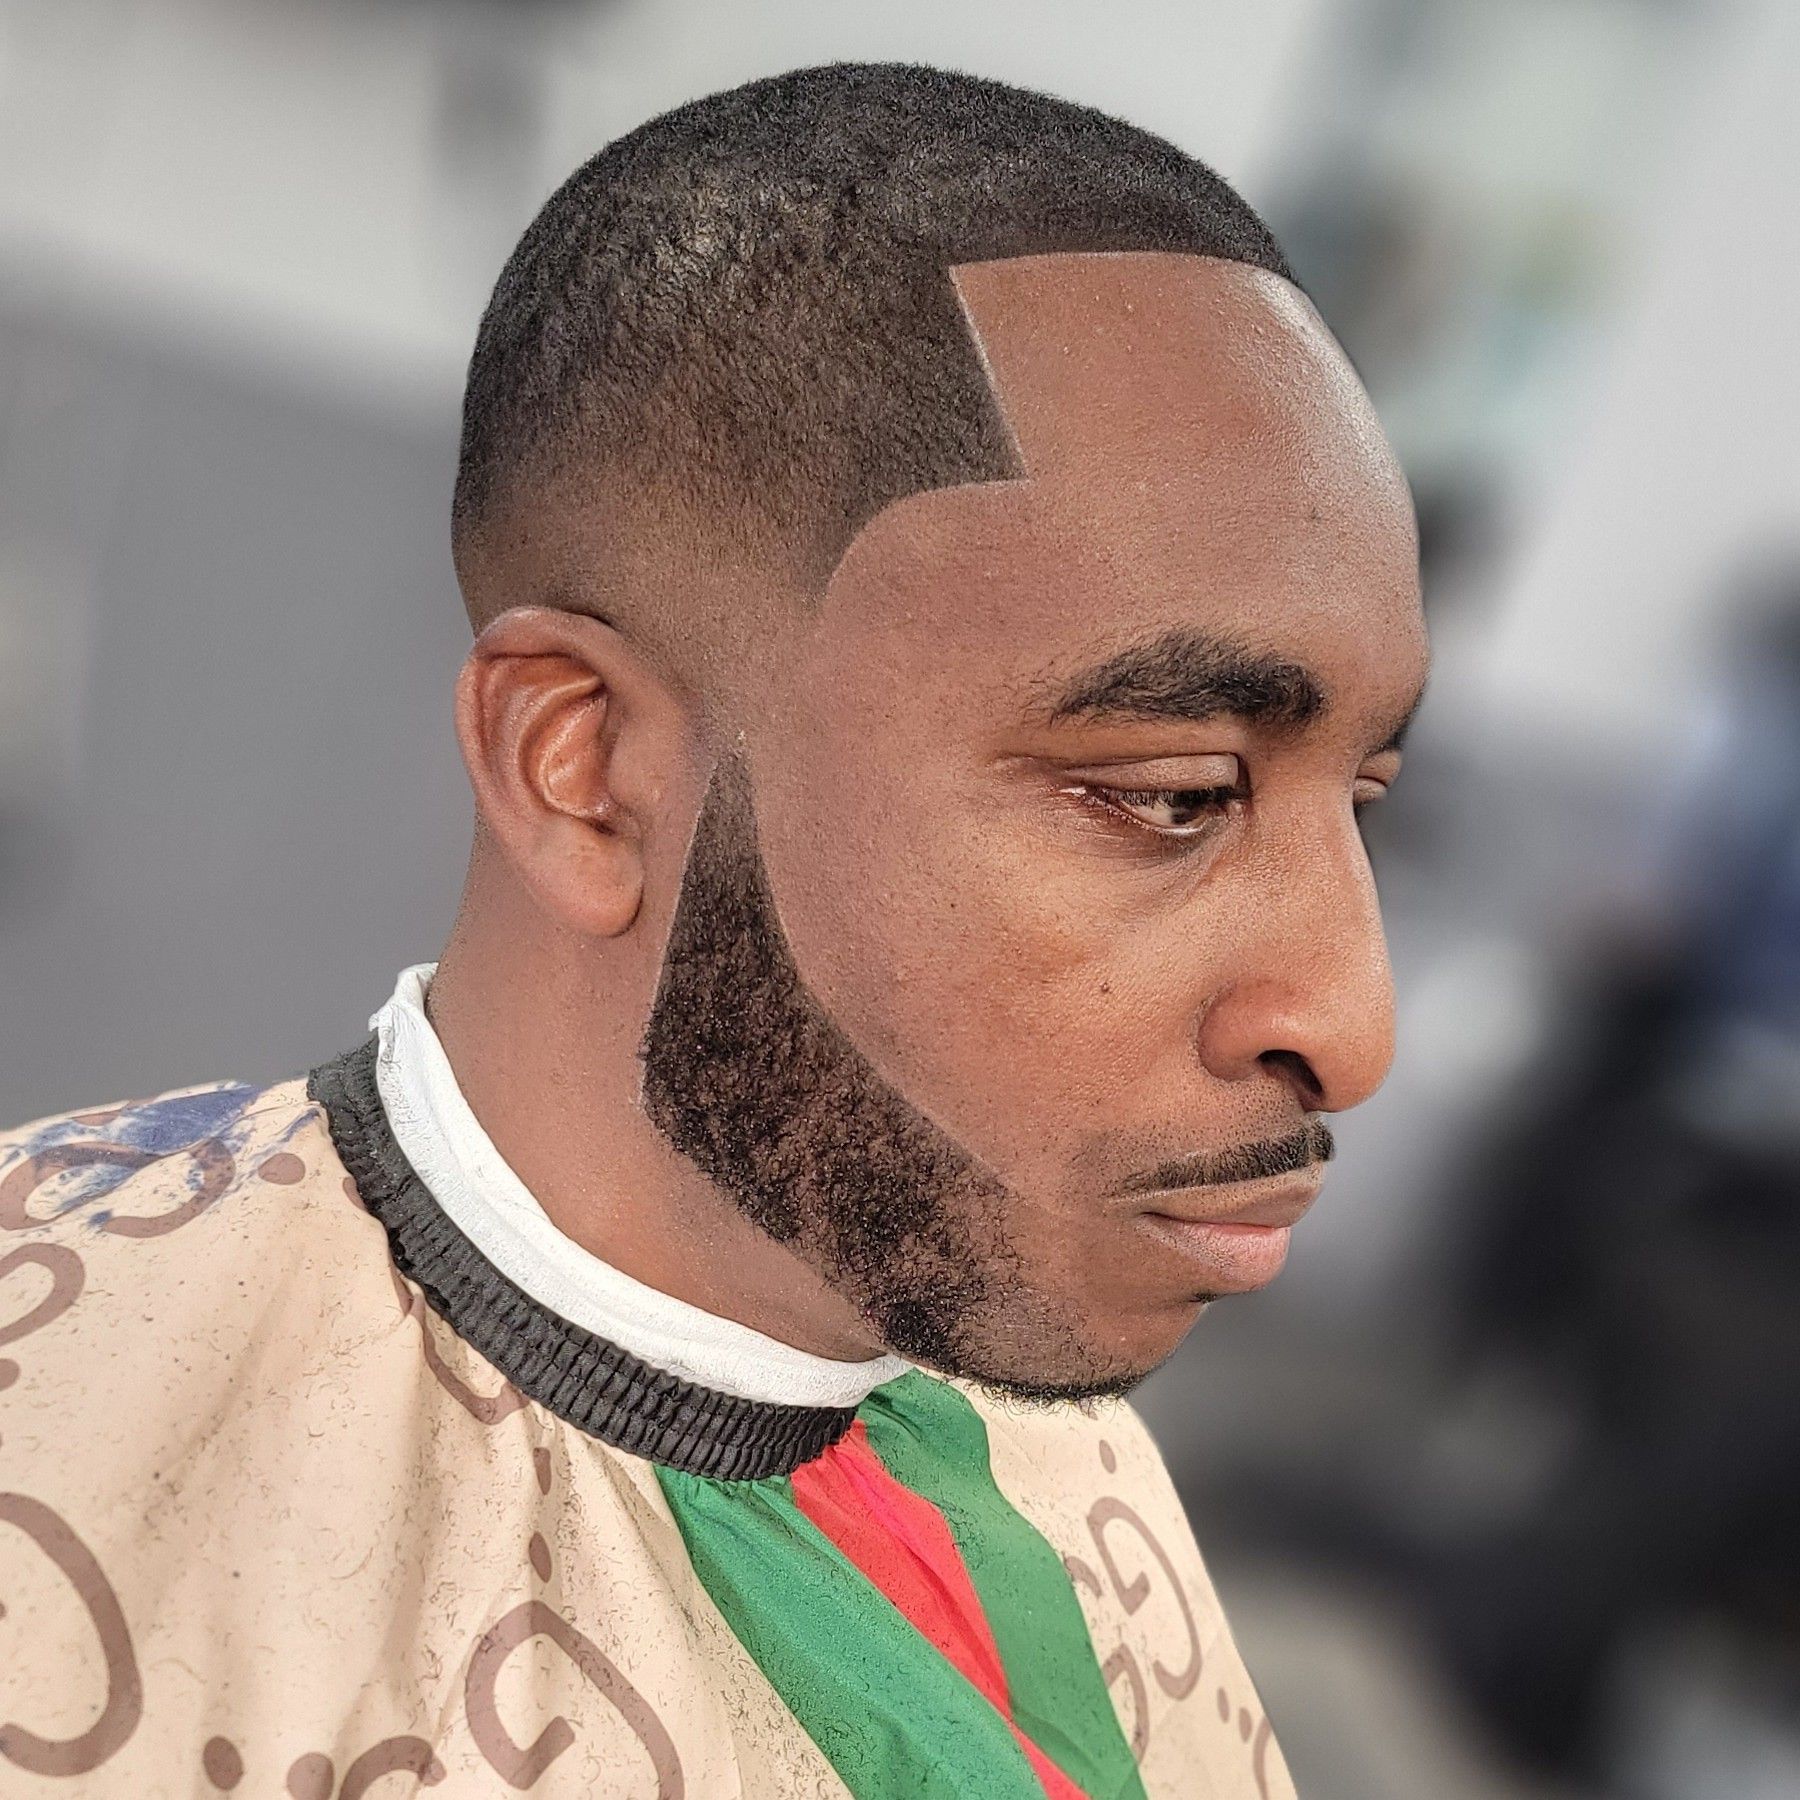 Man's haircut portfolio